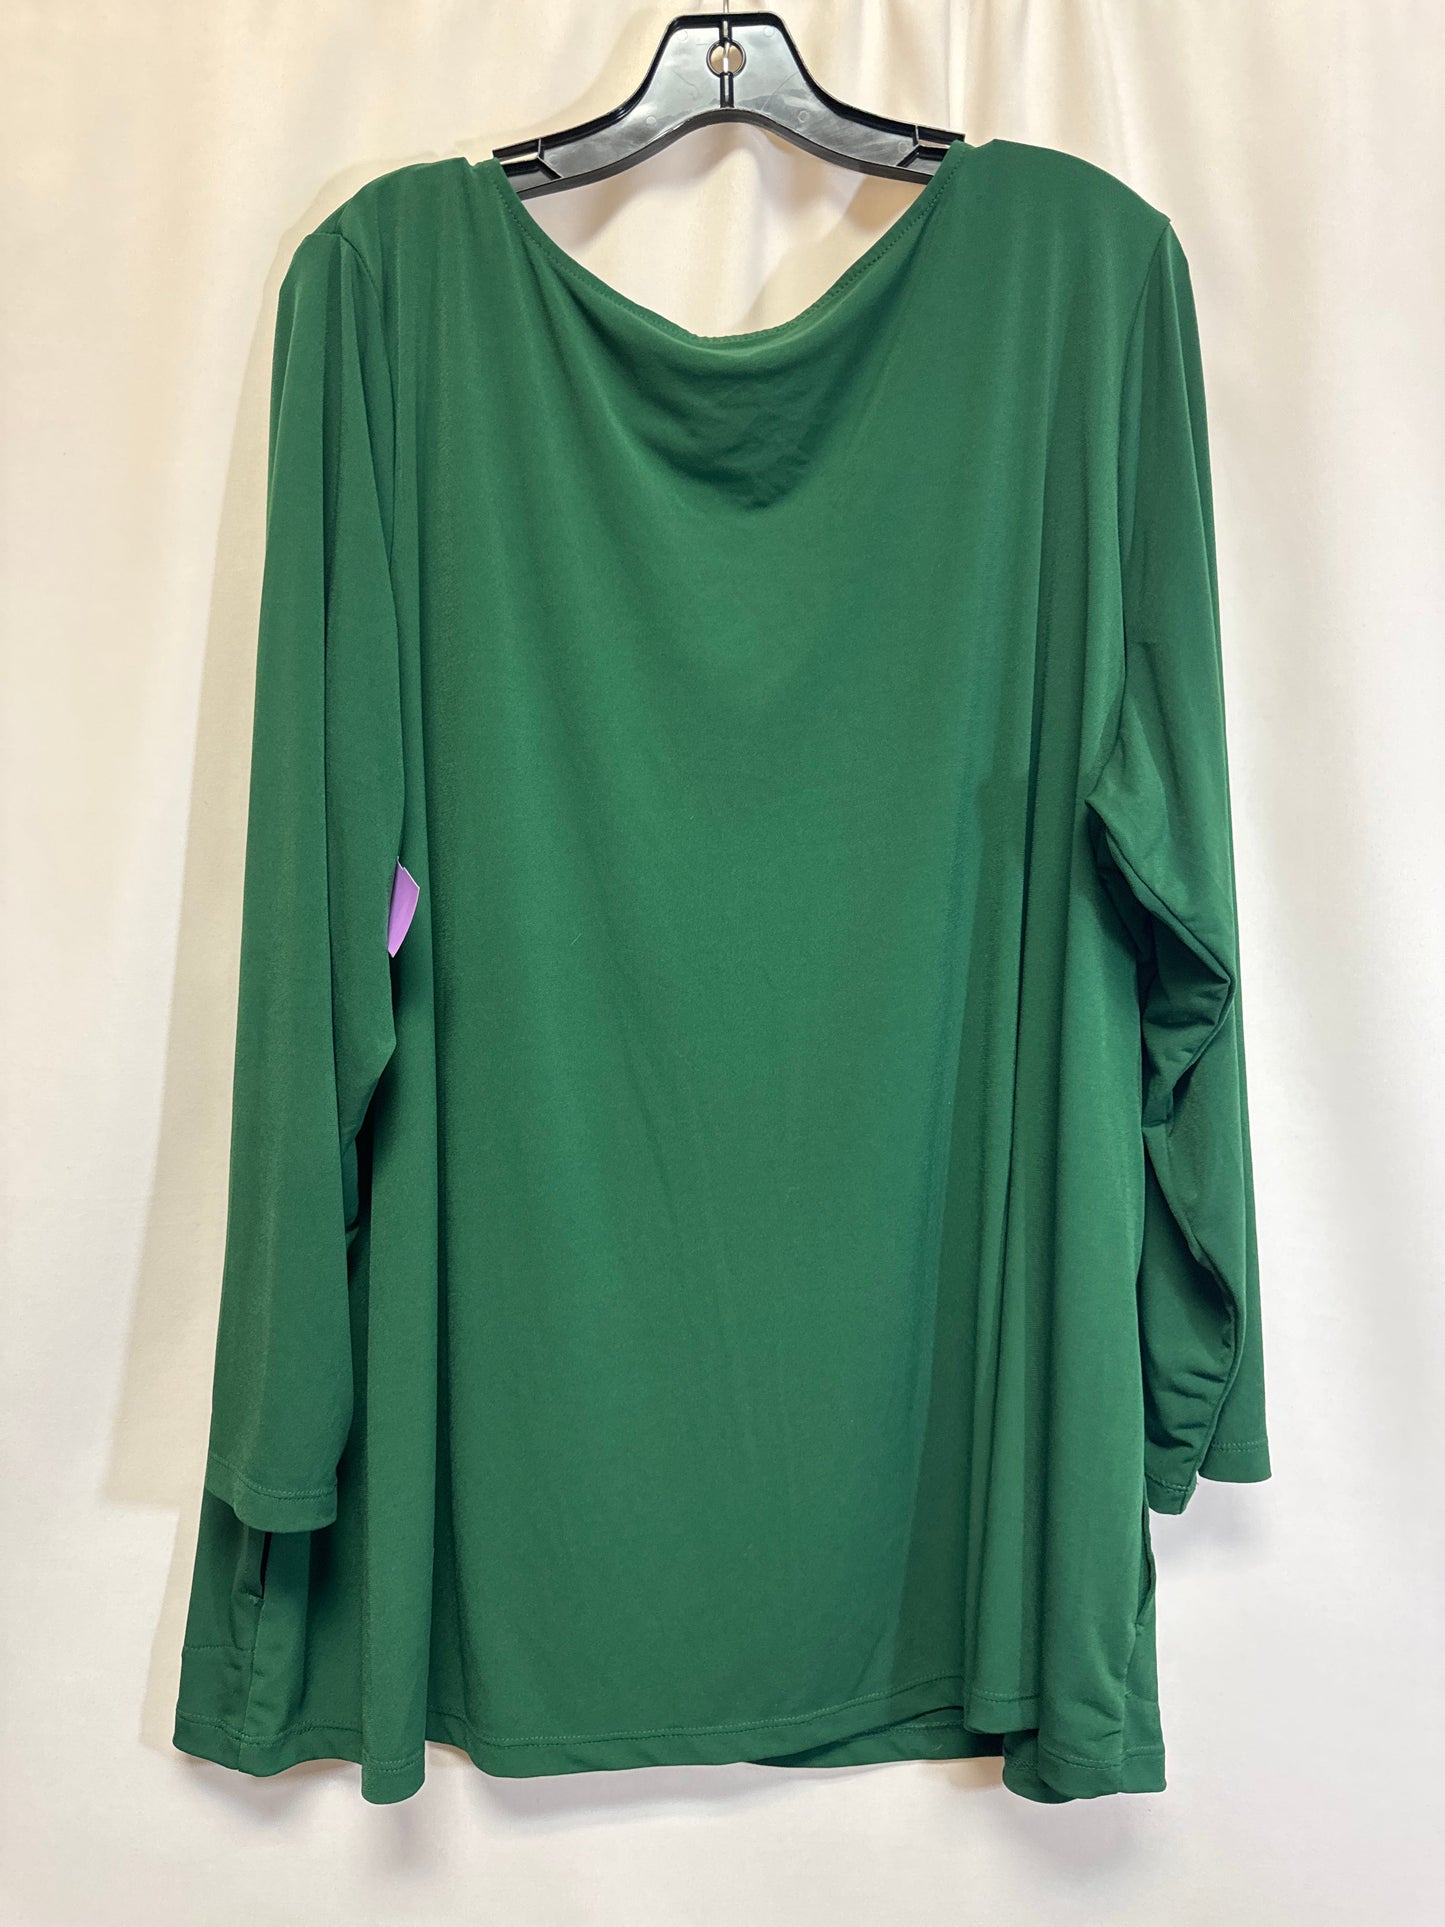 Green Top 3/4 Sleeve Susan Graver, Size 3x